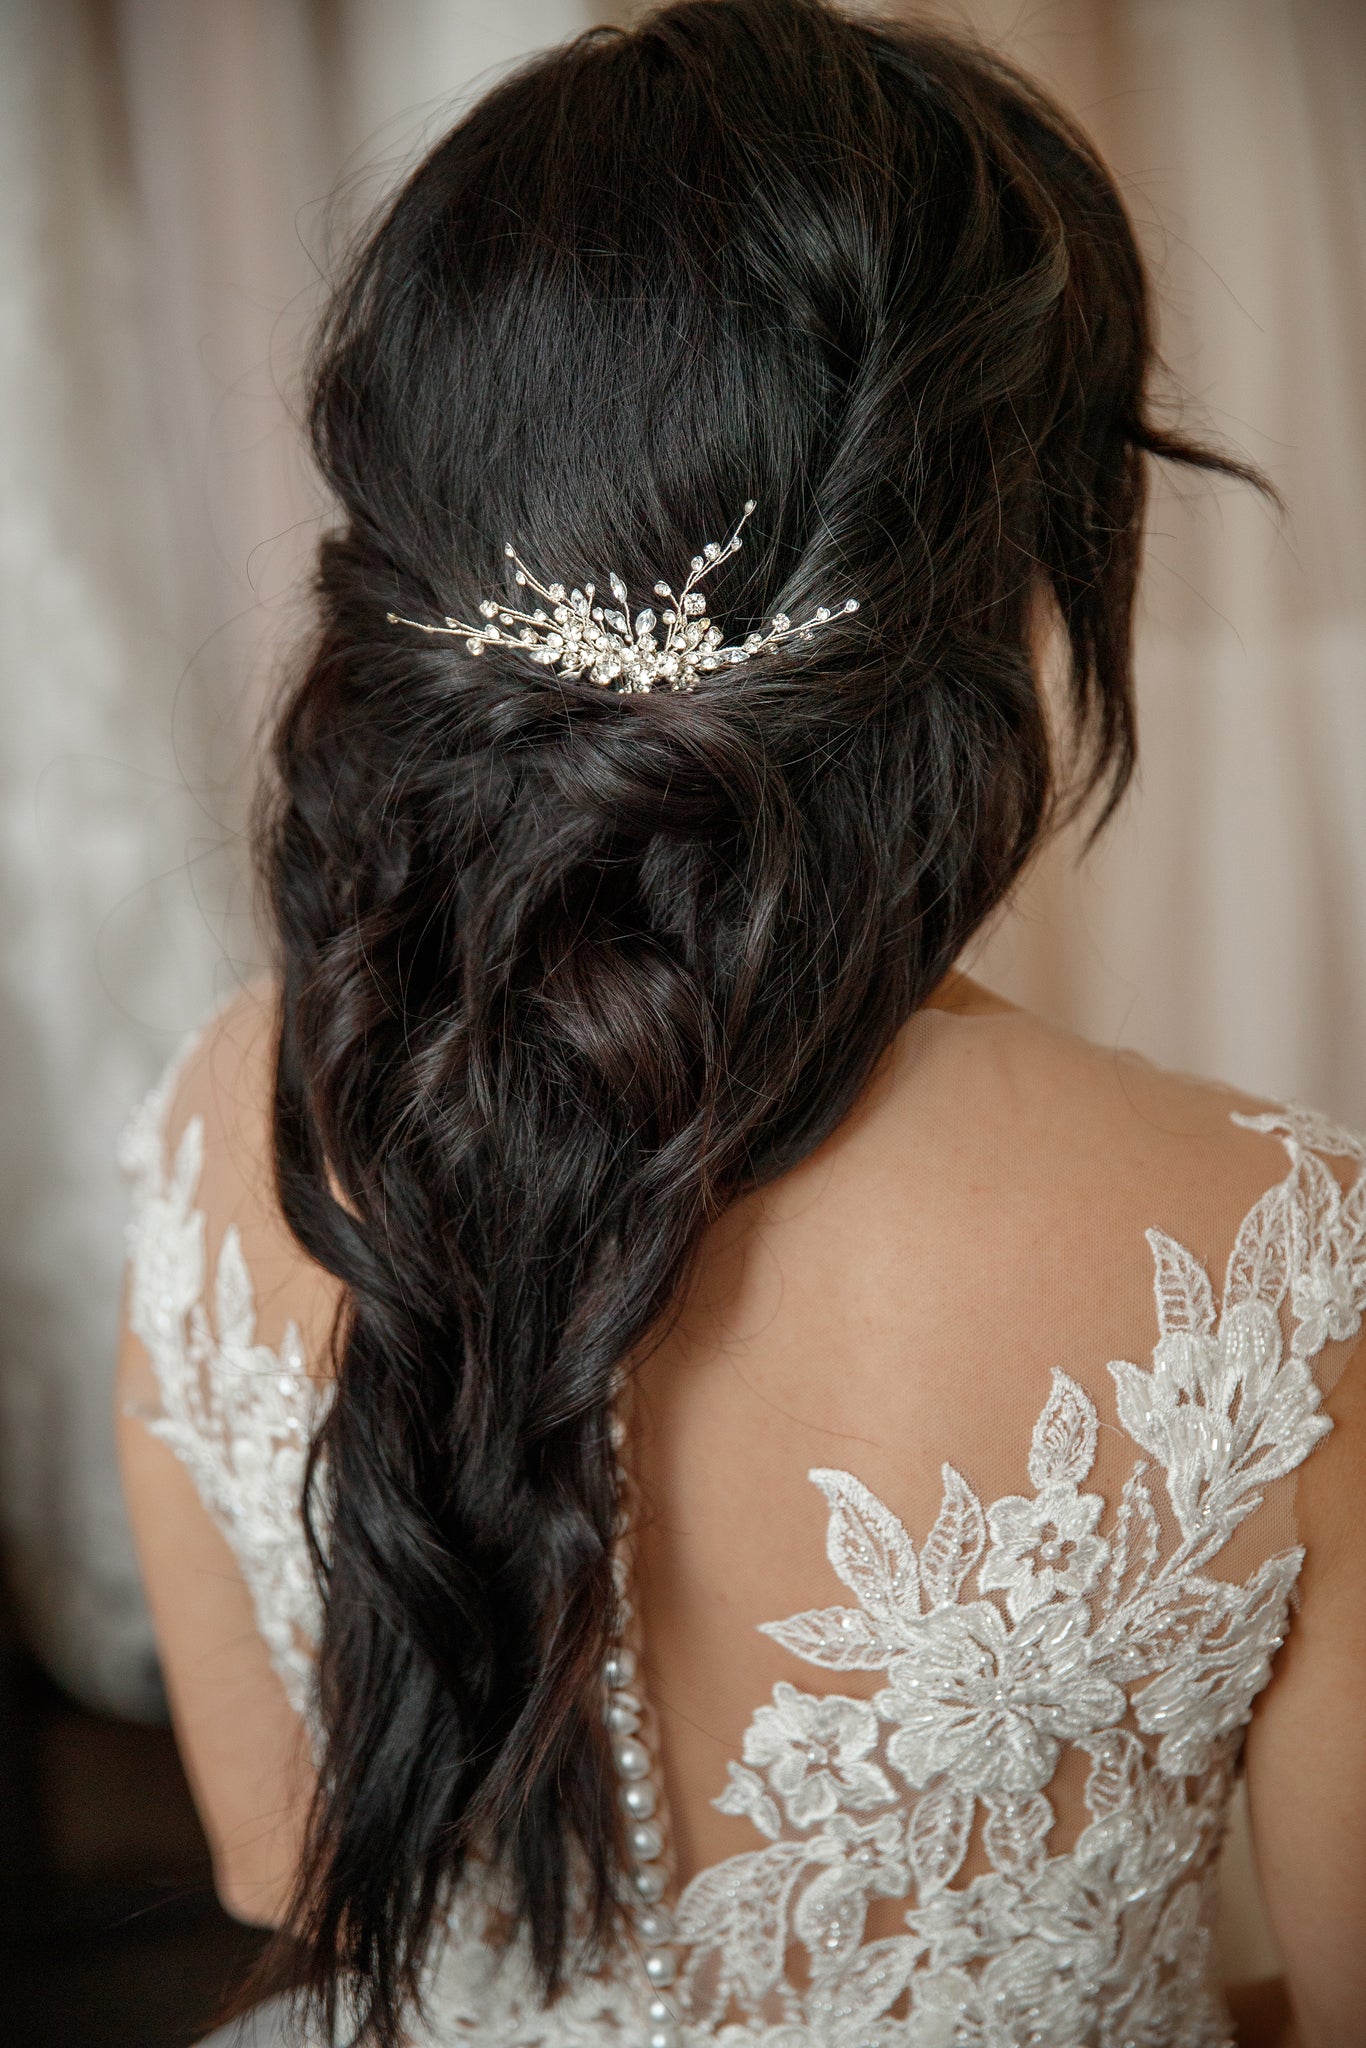 Rhinestone bridal hair comb